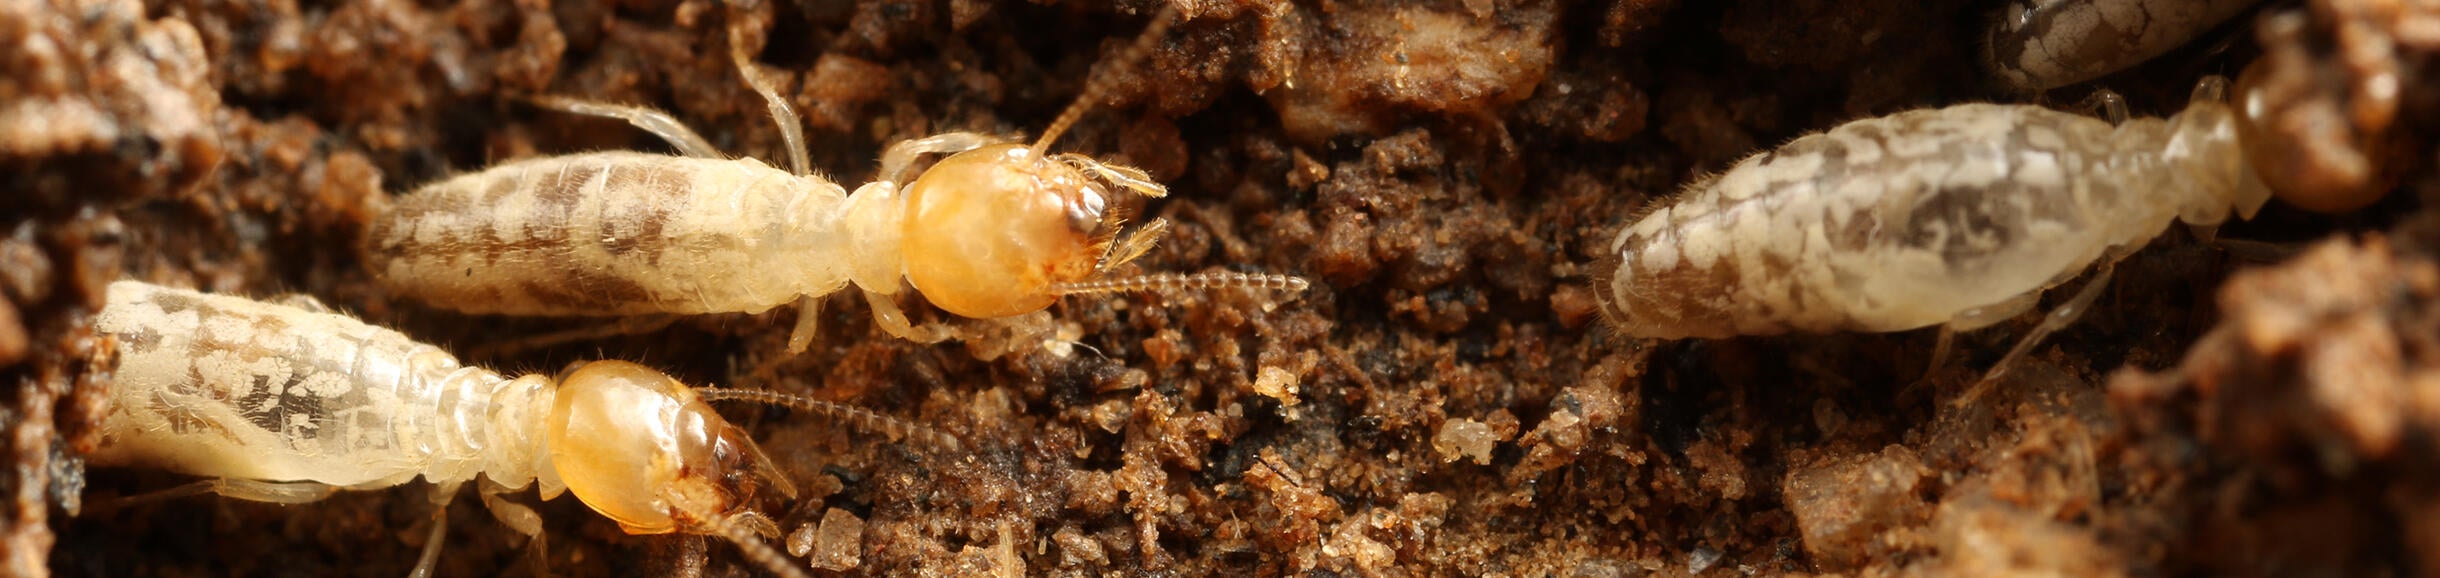 Gnathamitermes sp. termites